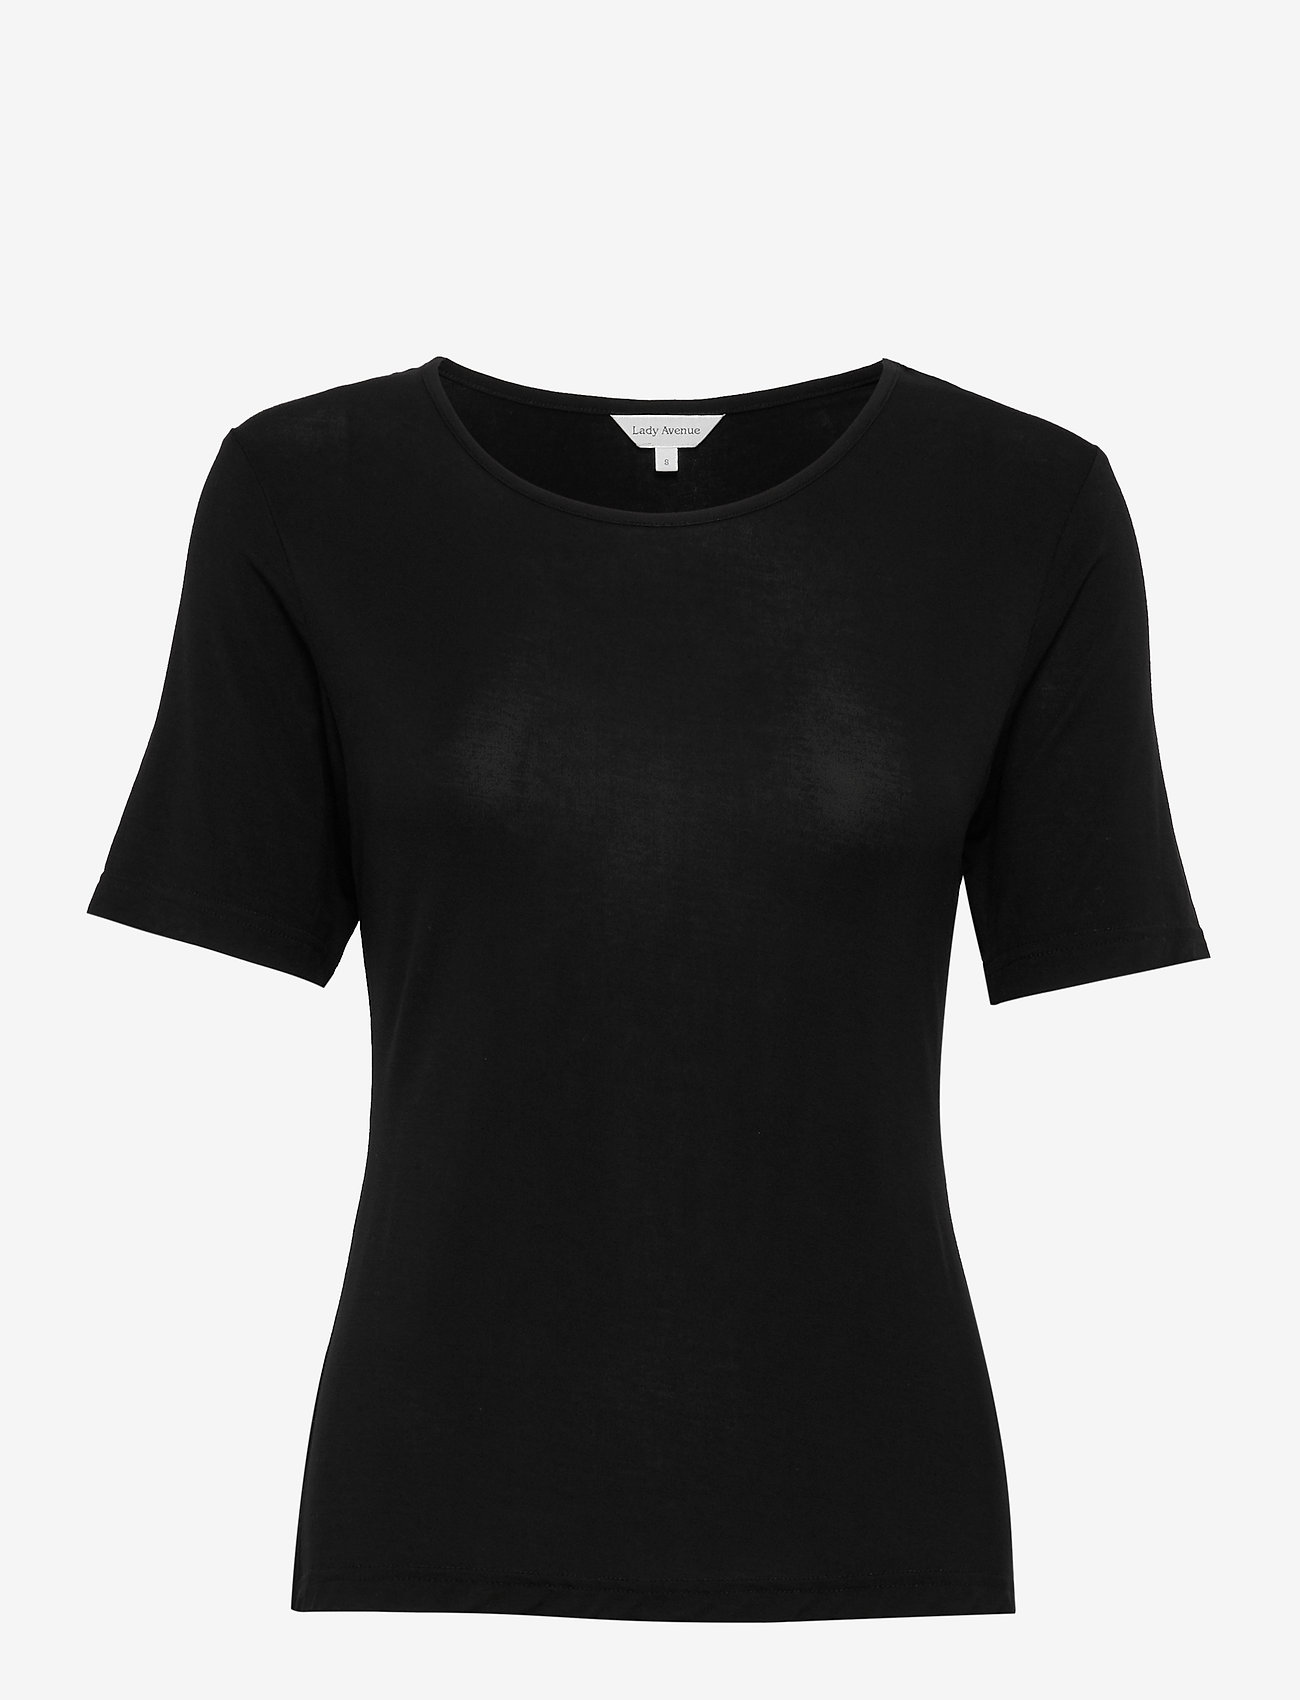 Lady Avenue - Bamboo - T-shirt with short sleeve - yläosat - black - 1